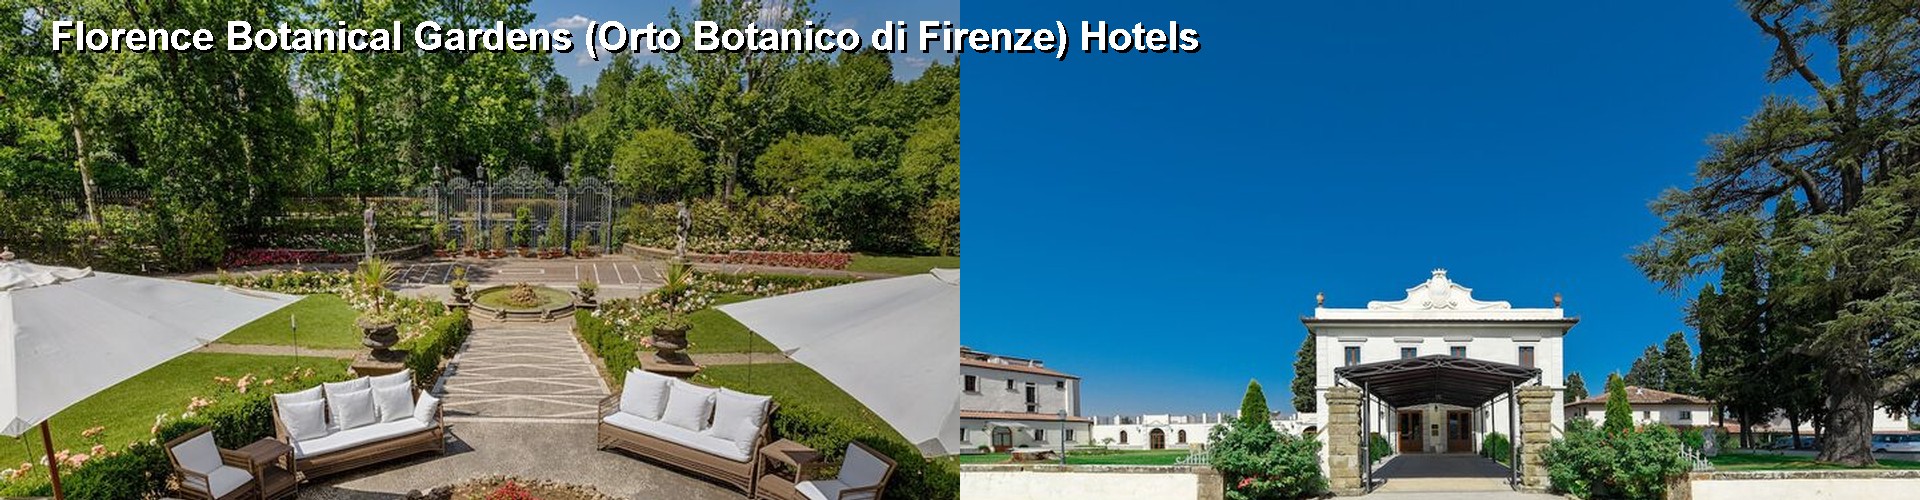 5 Best Hotels near Florence Botanical Gardens (Orto Botanico di Firenze)